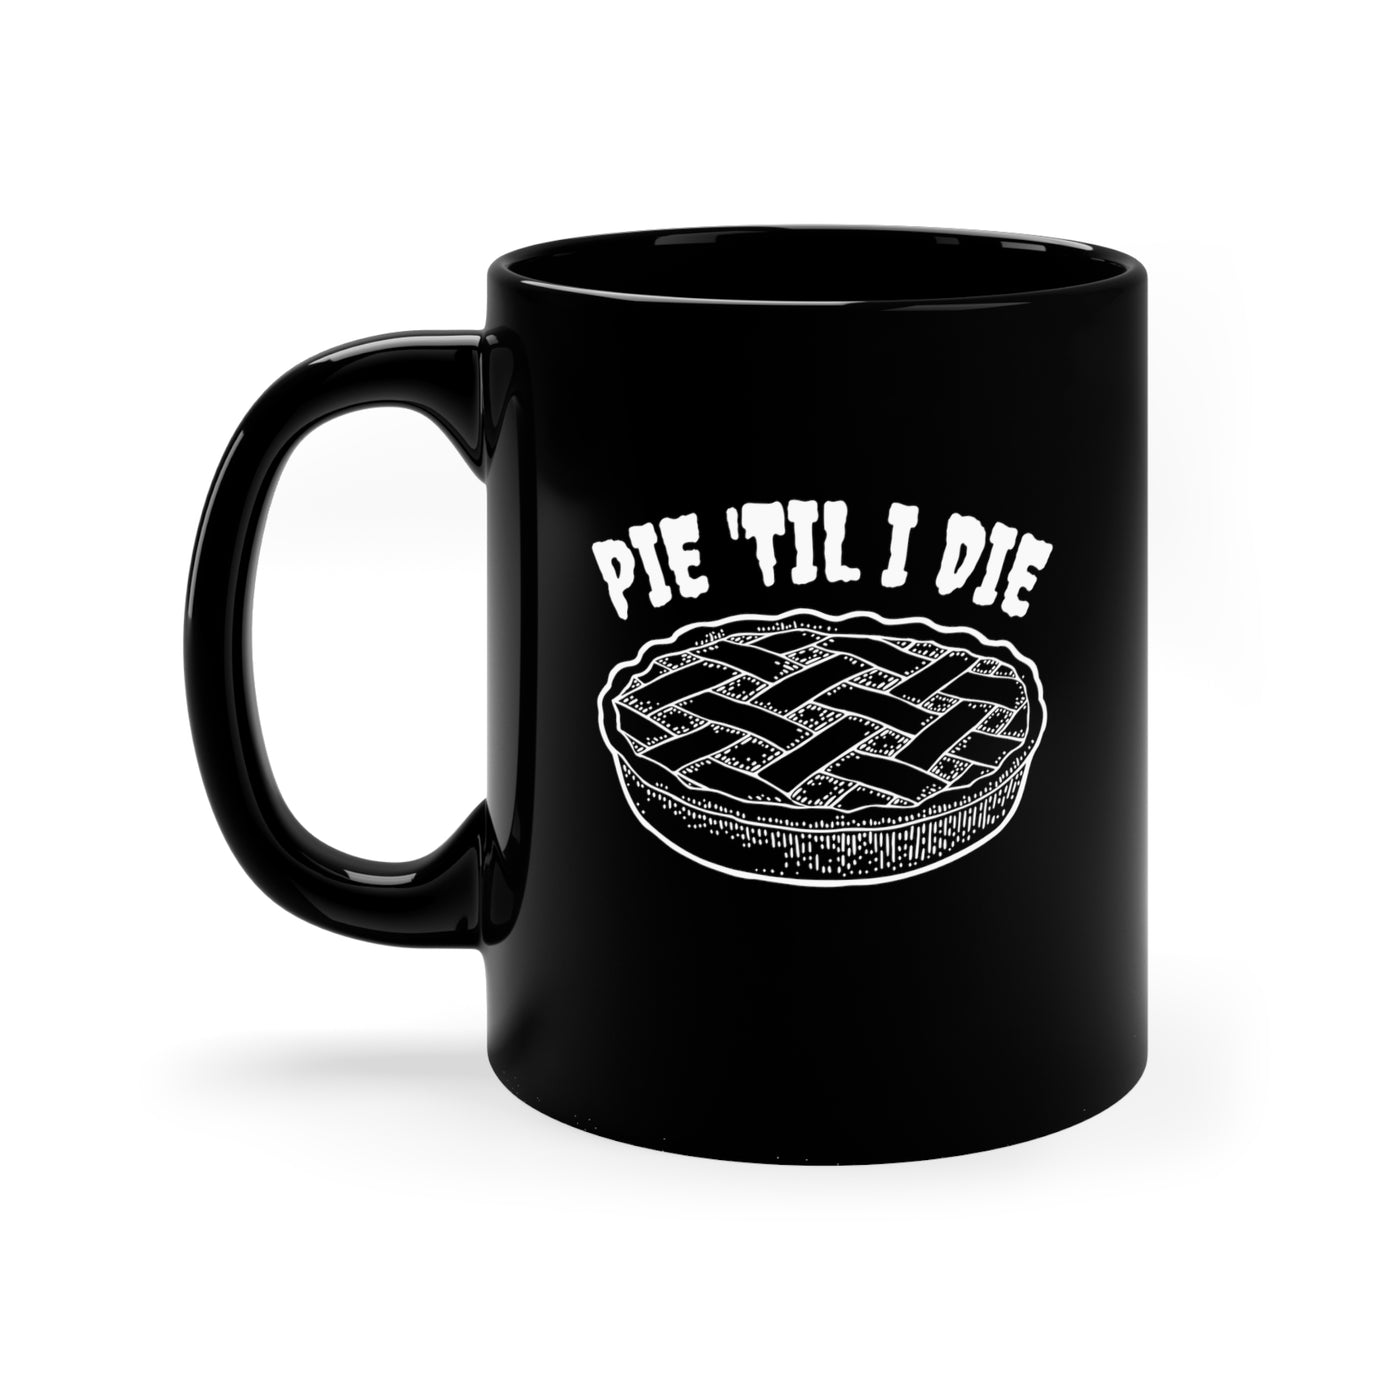 Pie 'Til I Die 11oz Mug